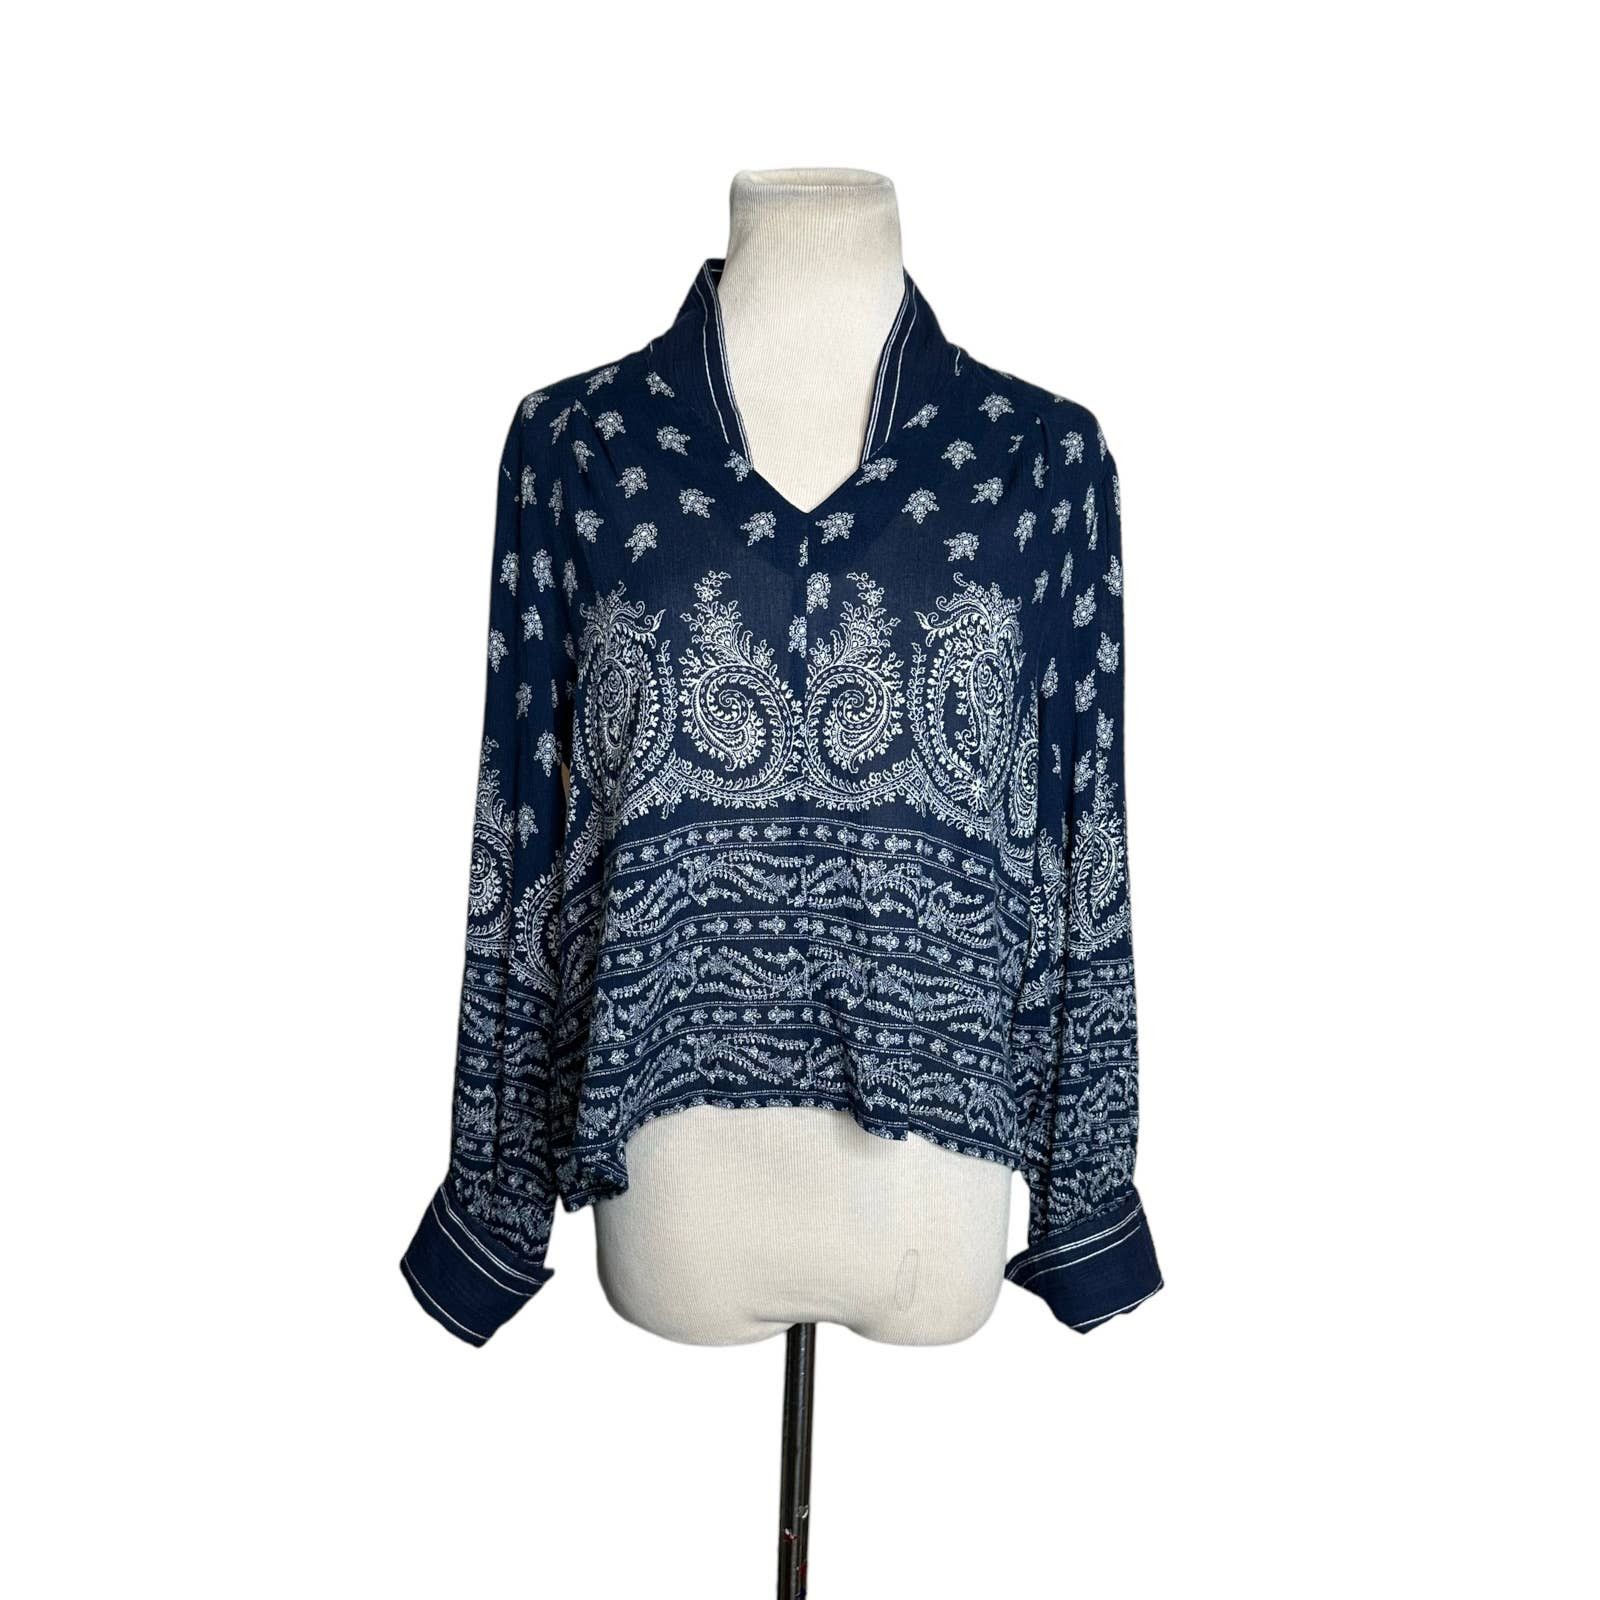 Sea New York Sea New York blue paisley print long sleeves blouse size 2 Size XS / US 0-2 / IT 36-38 - 10 Thumbnail